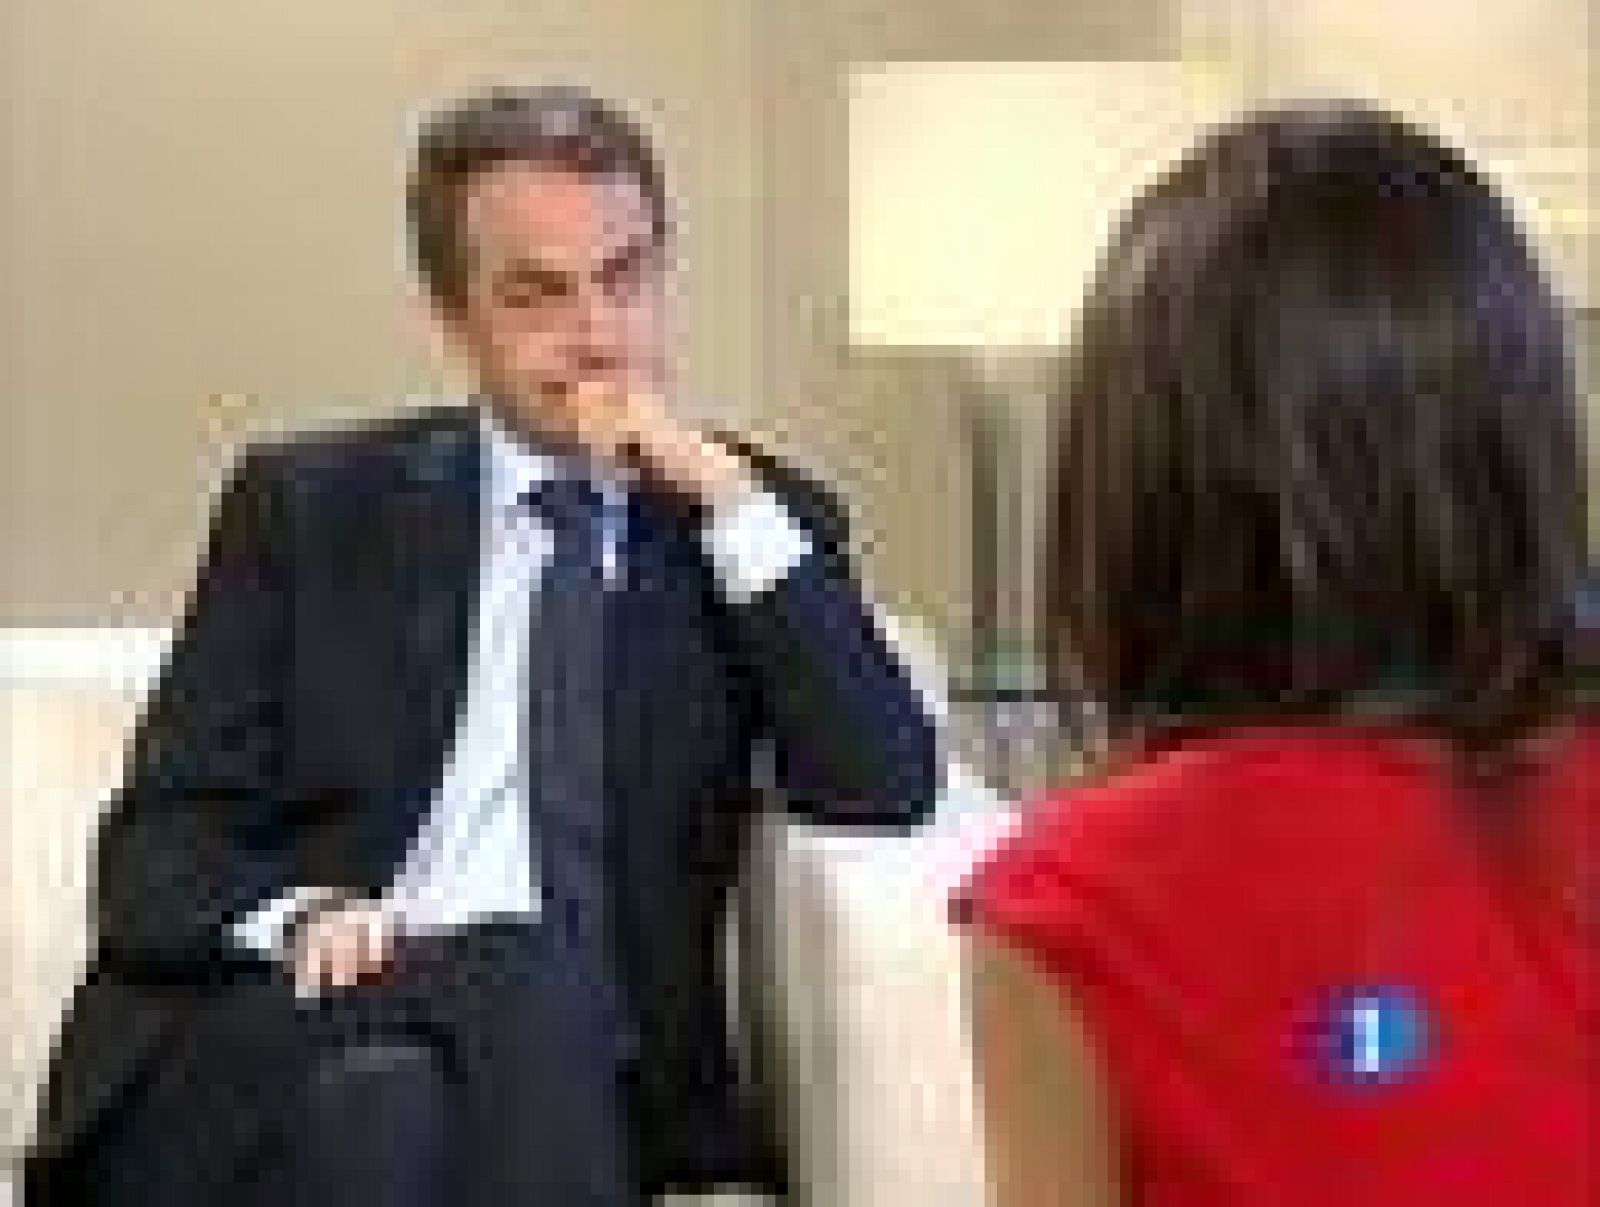 Sin programa: Zapatero: "No toca hablar de mi futuro, no he abierto la carpeta de la candidatura" | RTVE Play